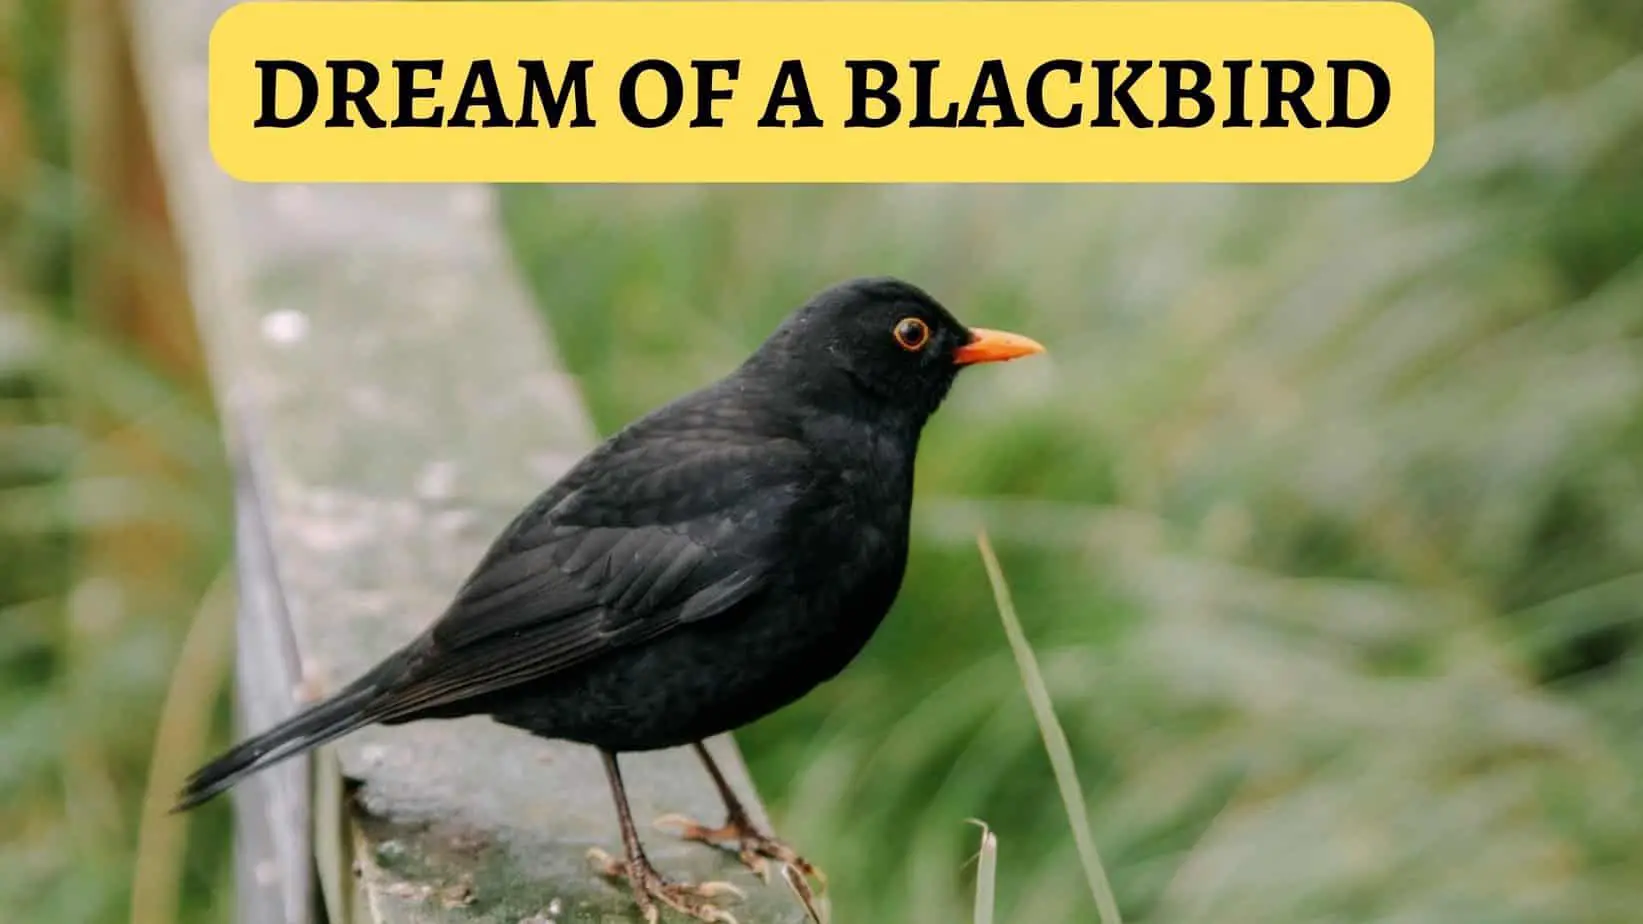 Reasons For Seeing Black Birds In Dreams